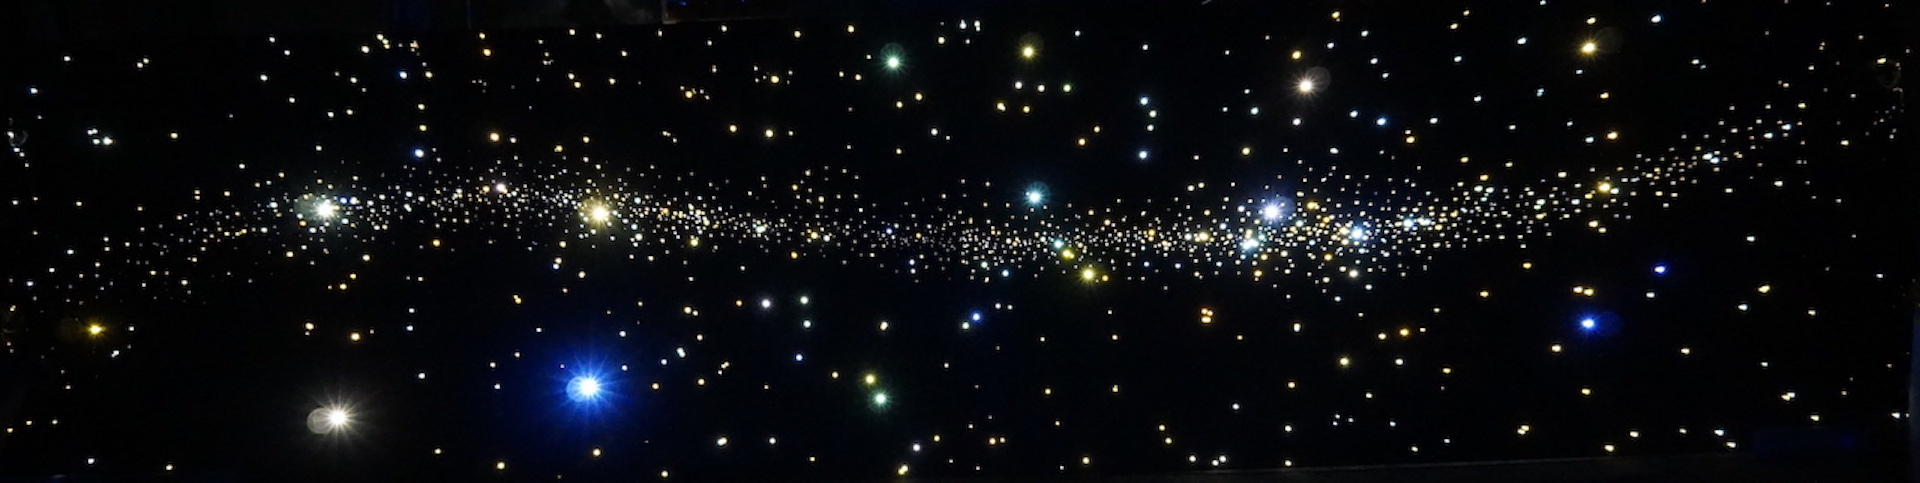 mycosmos sauna star ceiling fiber optic sky light milky way 1001 nacht berendock